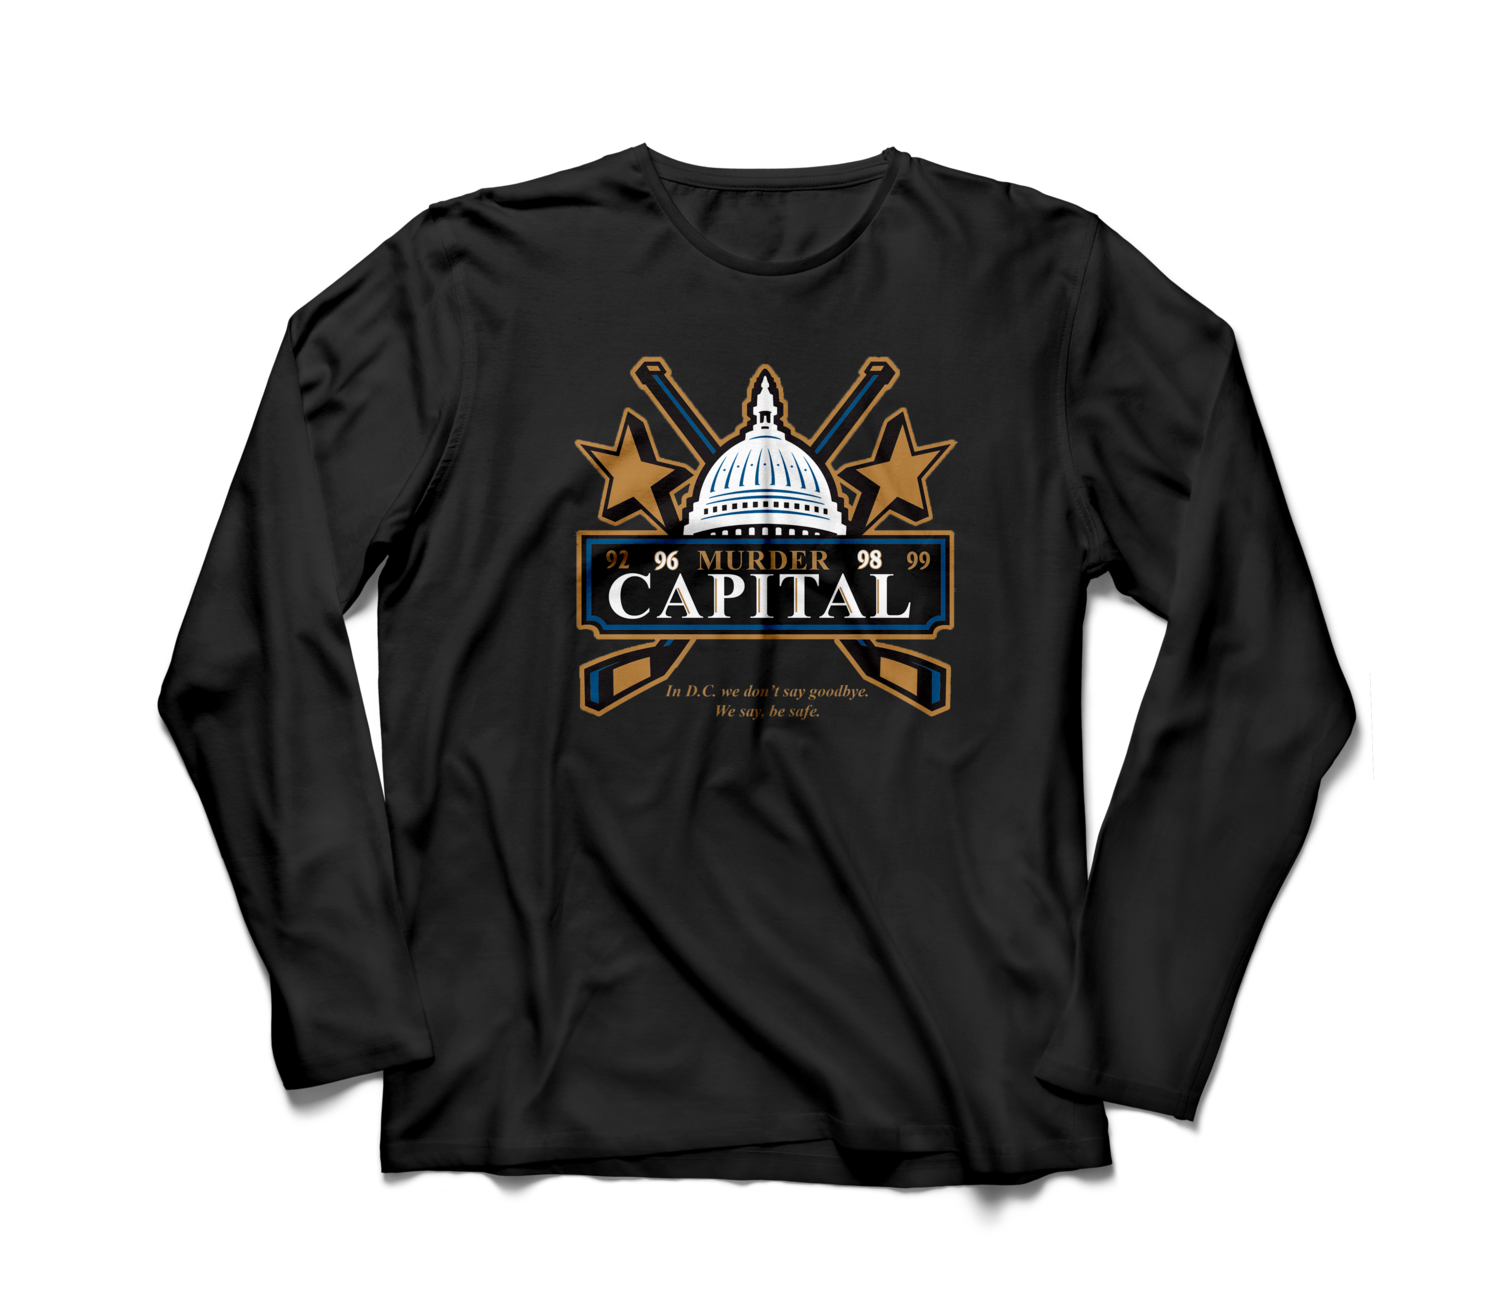 (202) Murder Capital Long Sleeve T-Shirt, Size: S